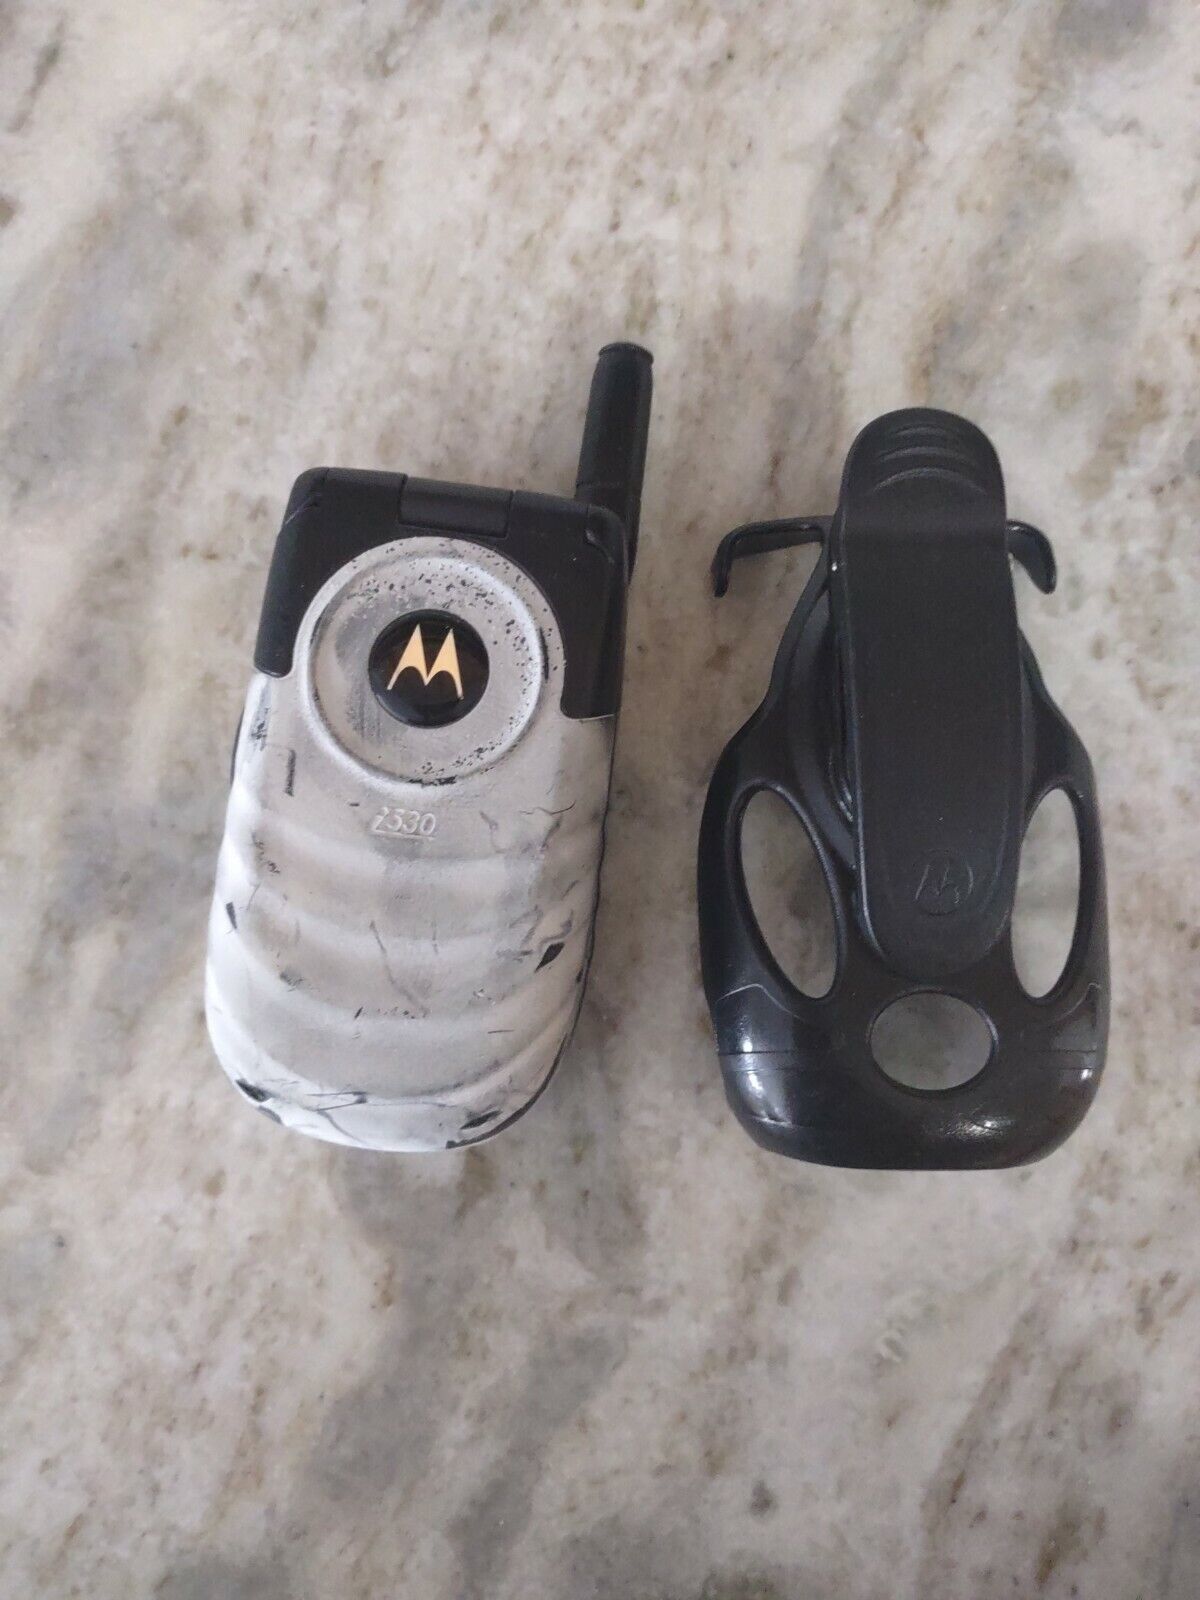 Motorola i530 - Black (Unlocked) Cellular Phone - $66.38